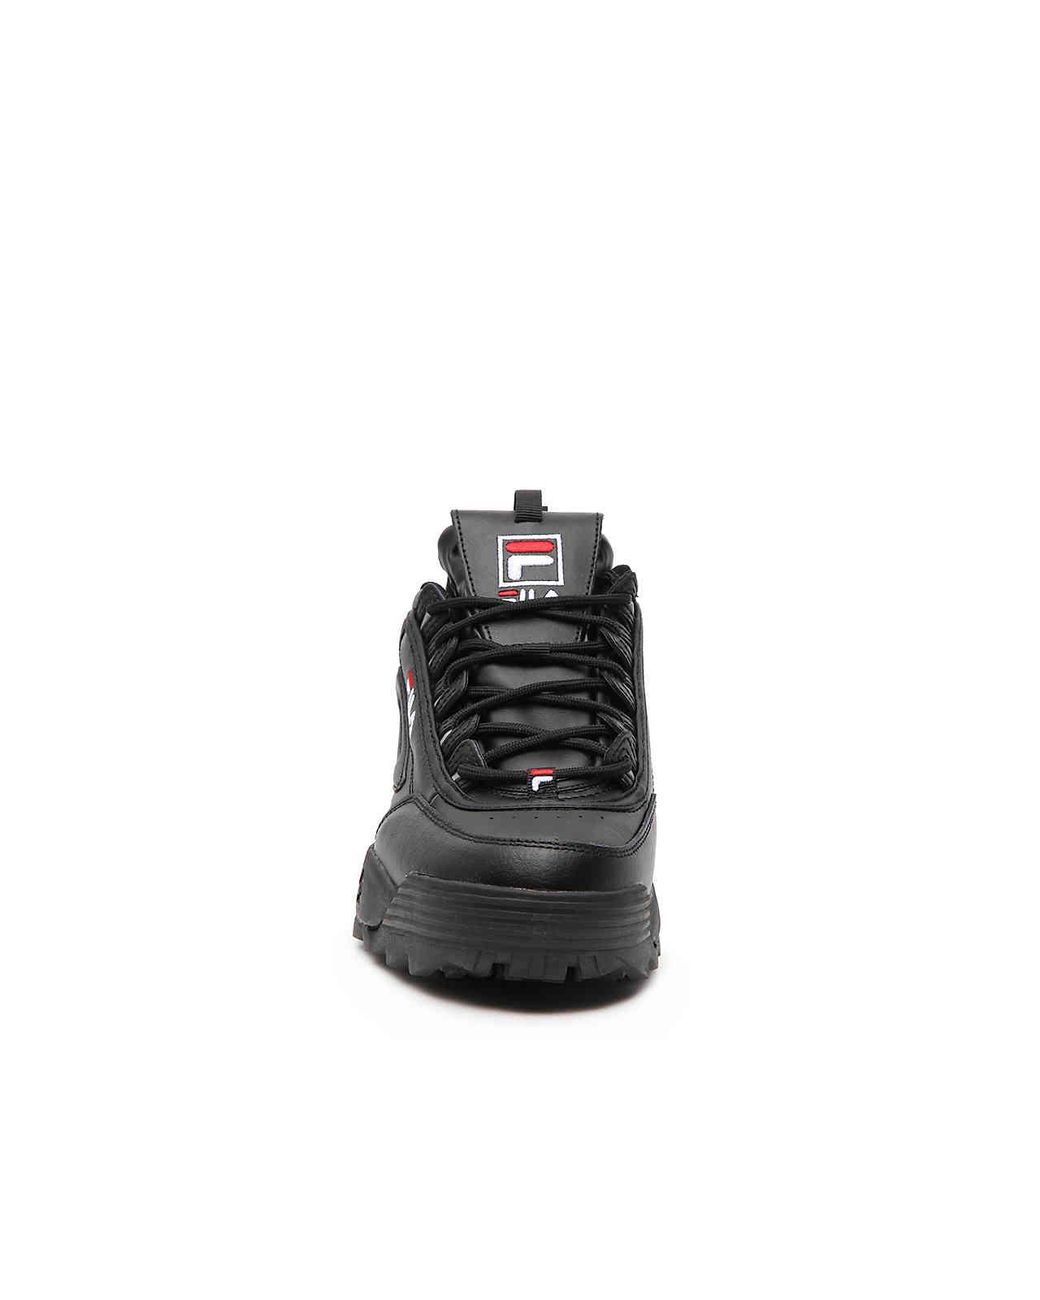 Fila Leather Disruptor Ii Premium Trainers in Black/White/Red (Black) | Lyst